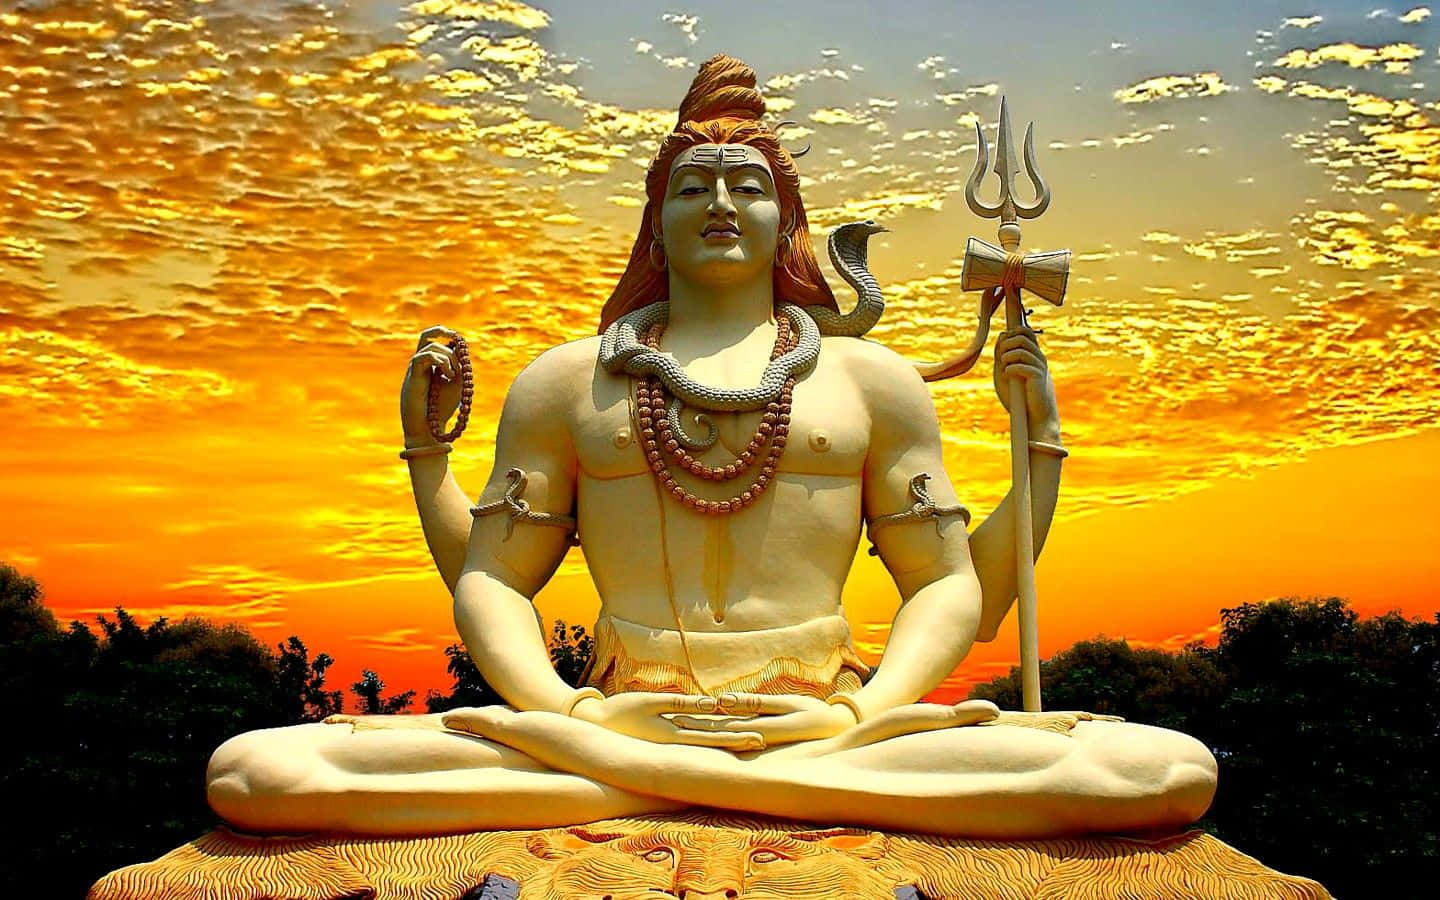 Enstaty Av Herren Shiva Som Sitter I Lotusposition